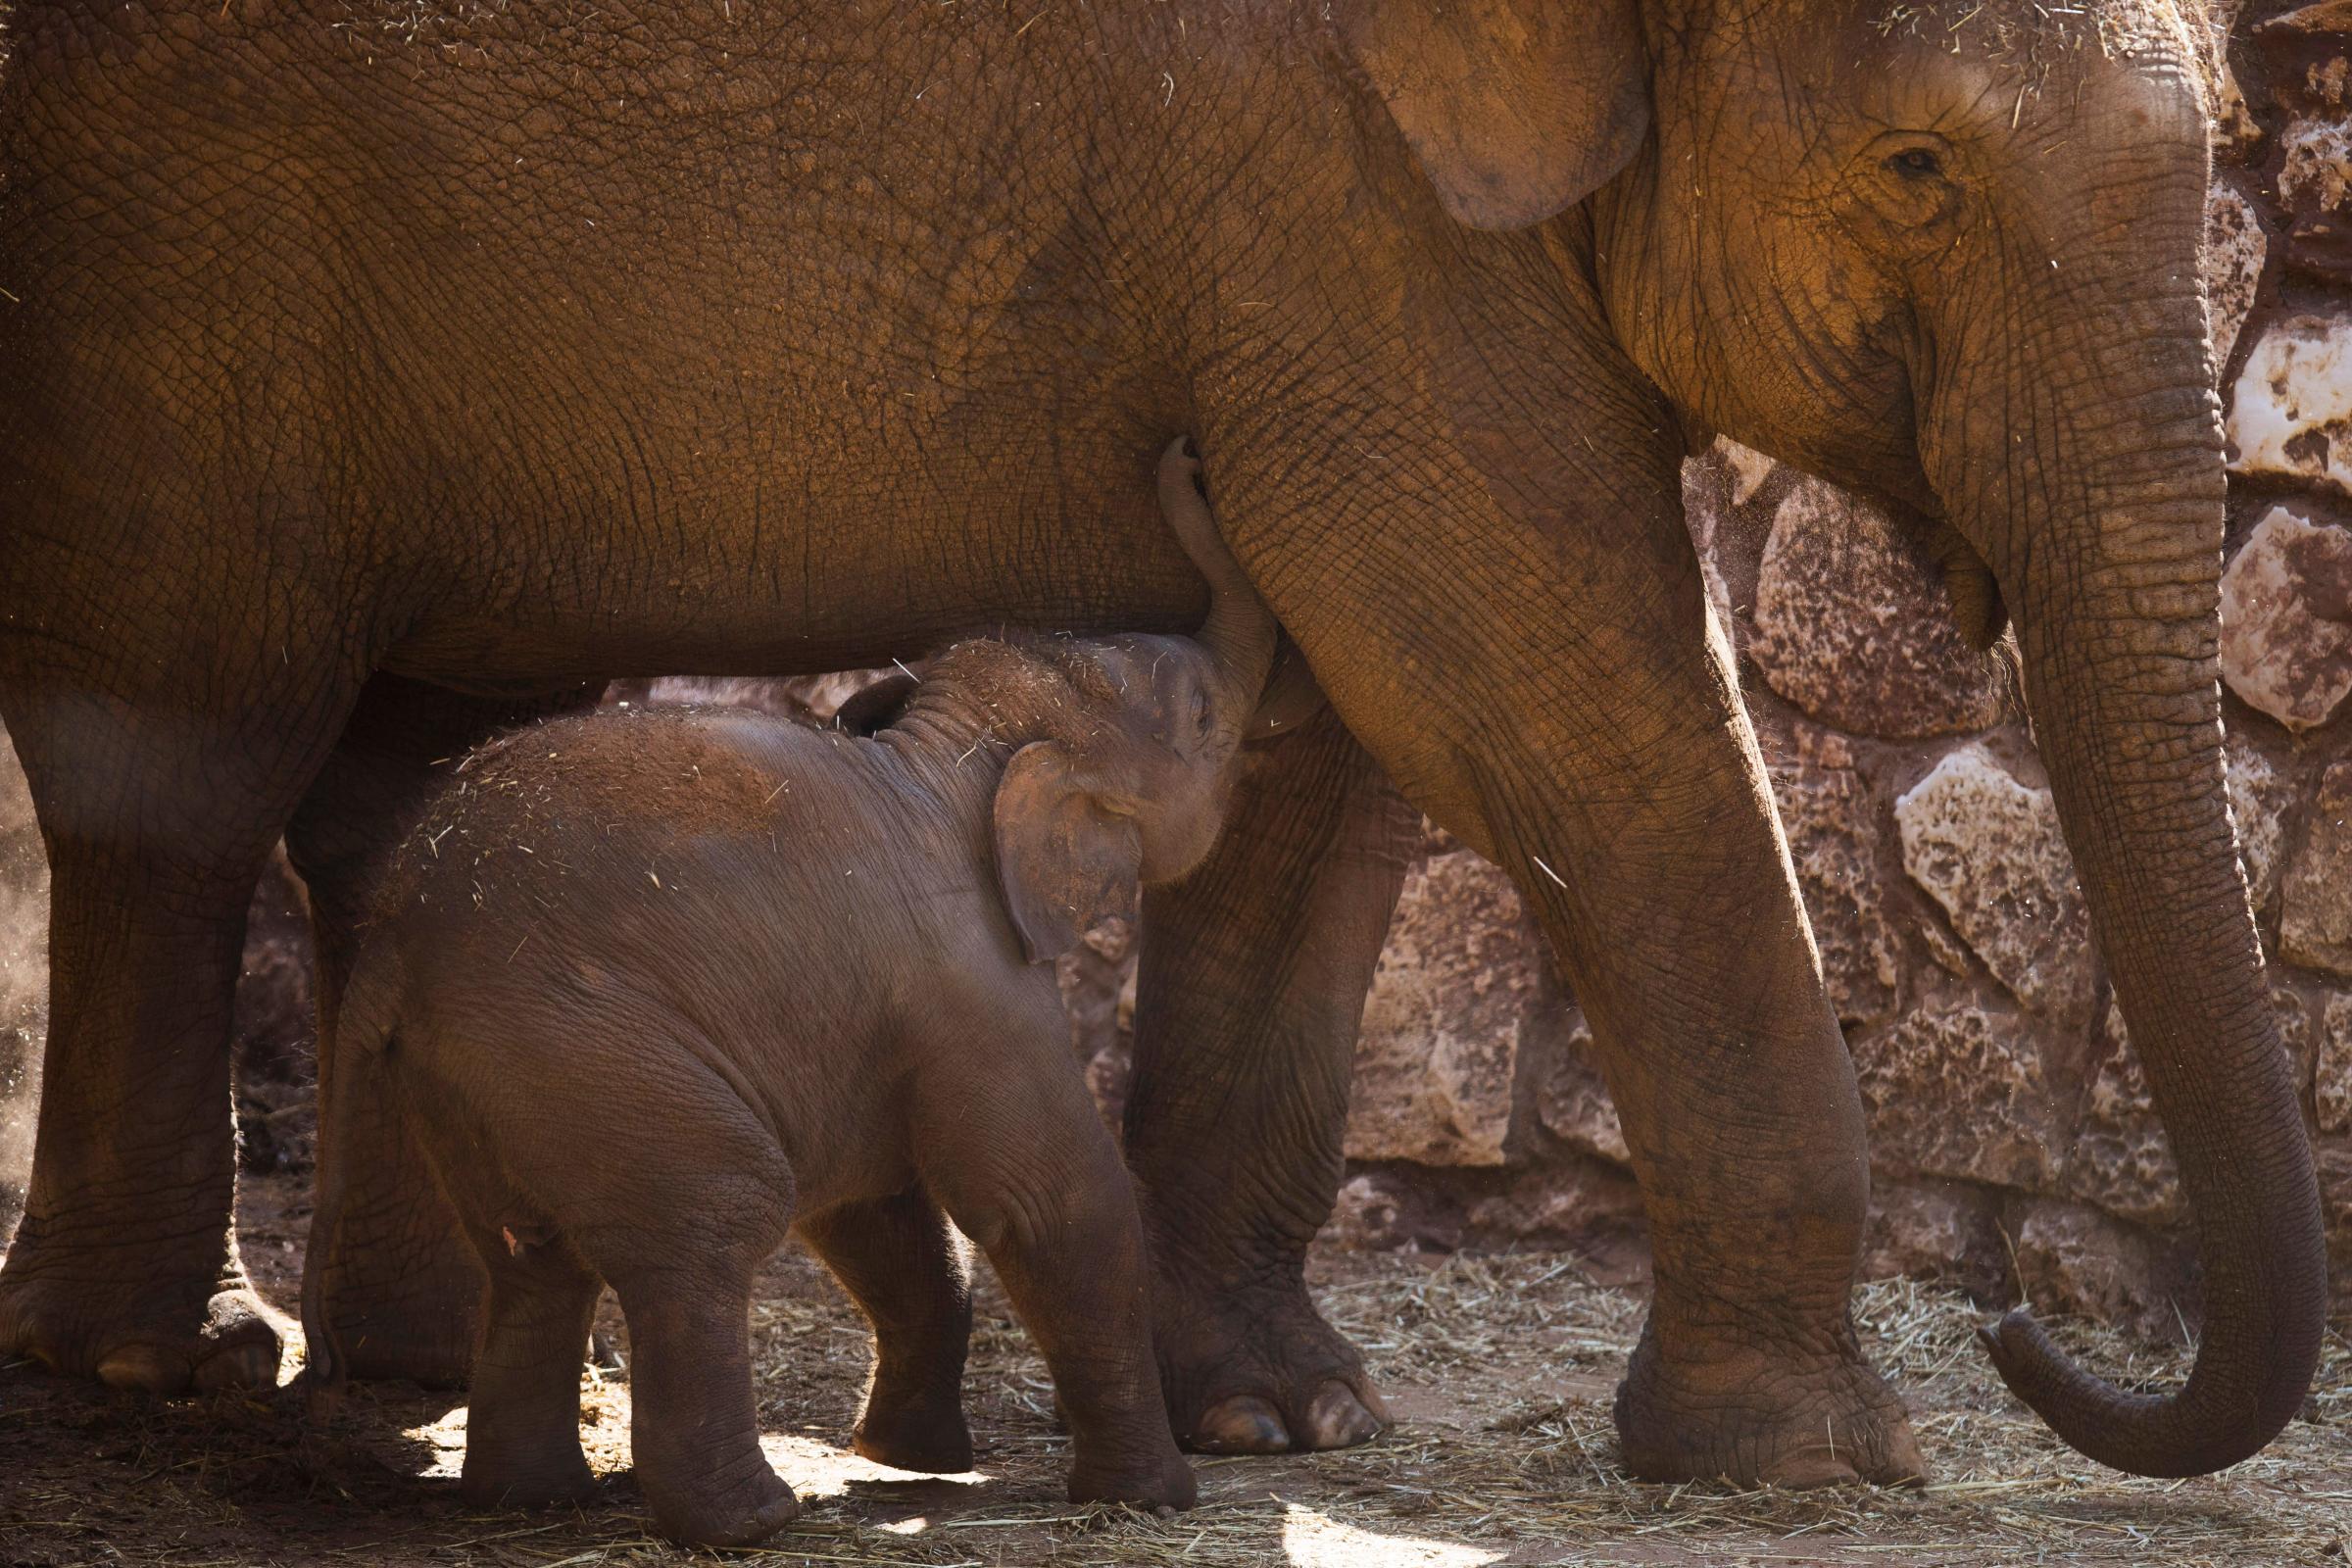 New Born Elephants Appear At The Safari Zoo In Israel